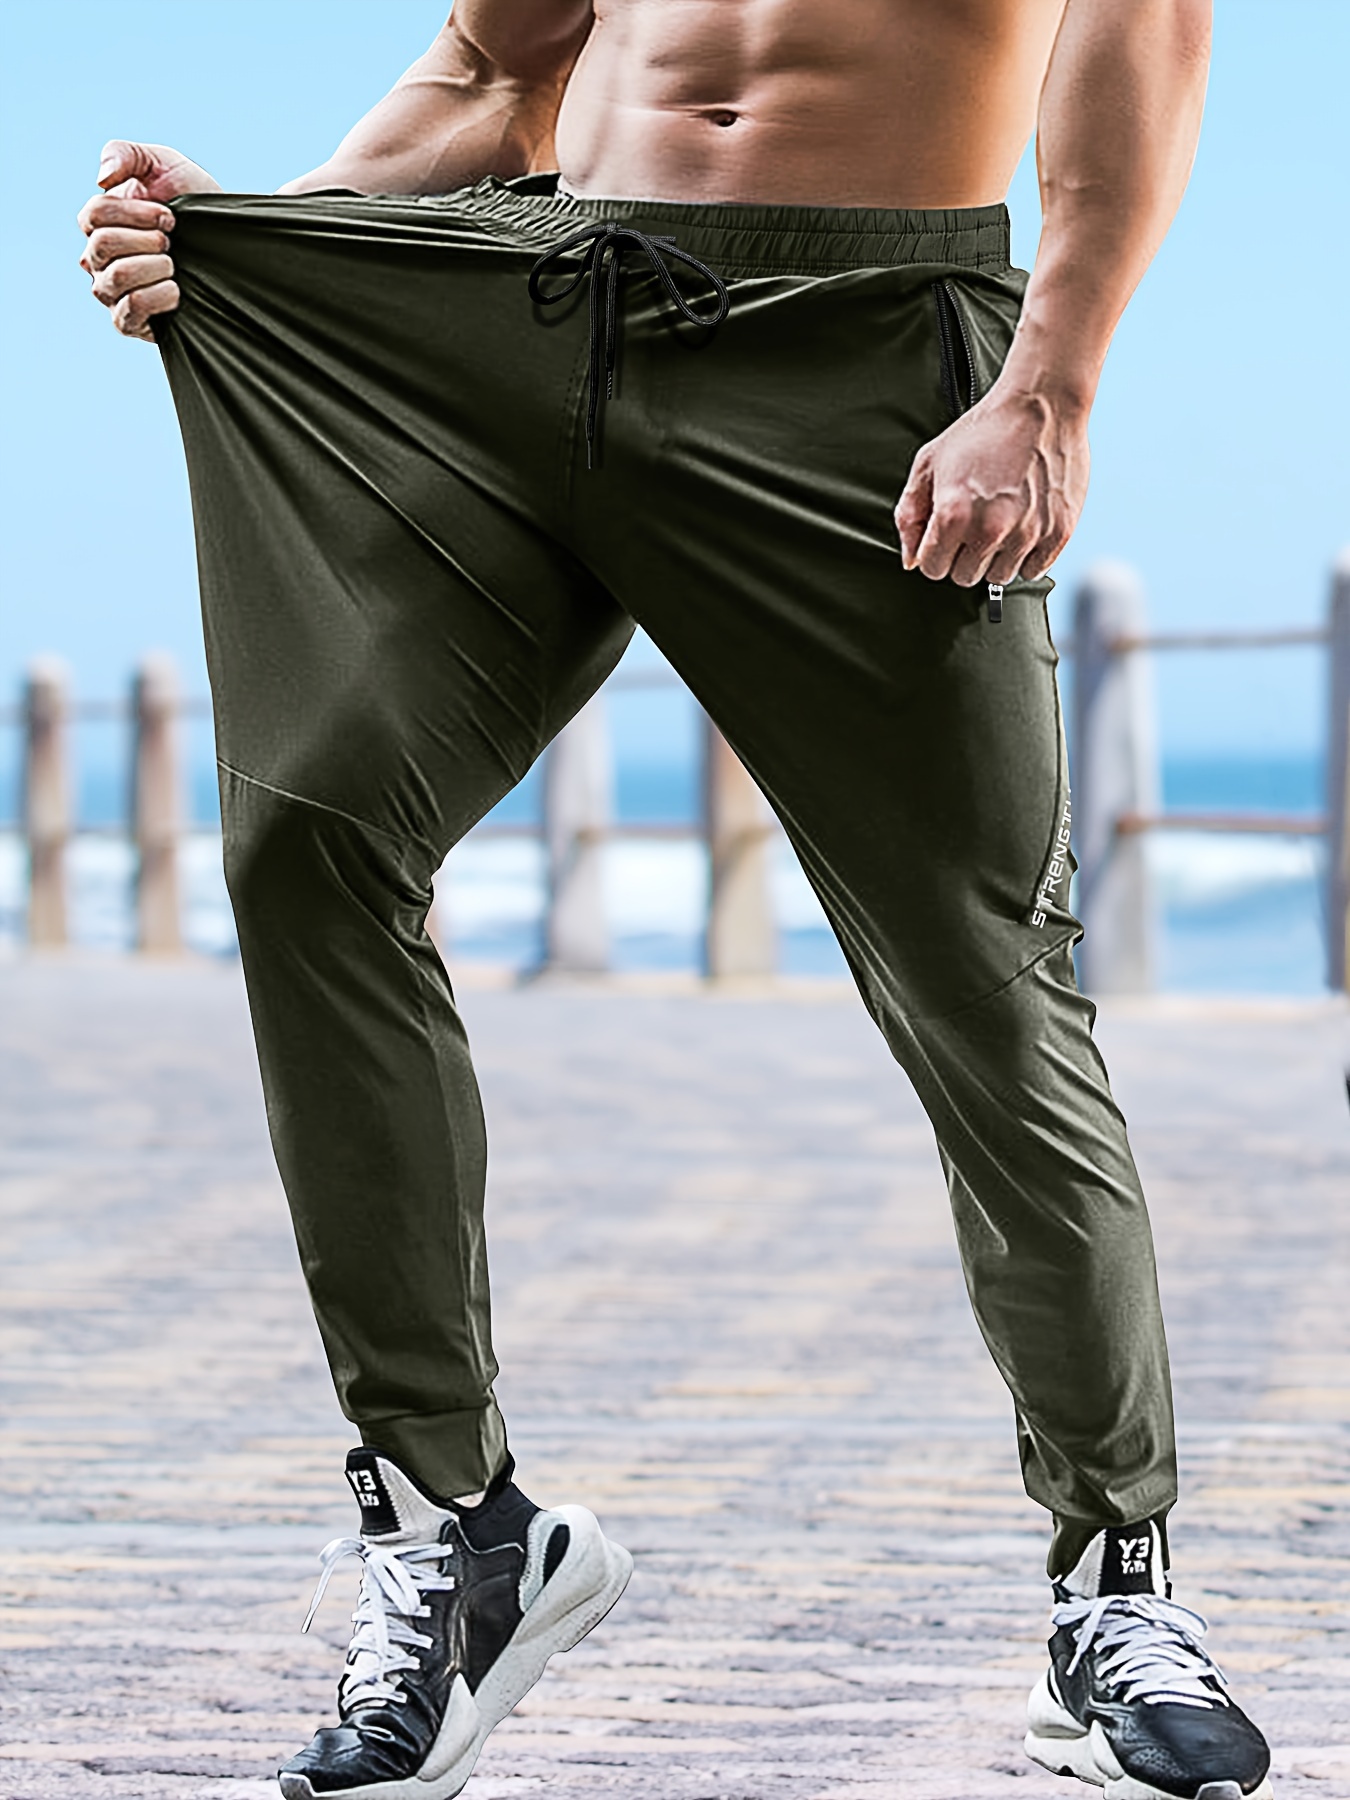 Pantalones deportivos ajustados para hombre, pantalones deportivos para  correr, entrenar, hacer ejercicio, gimnasio